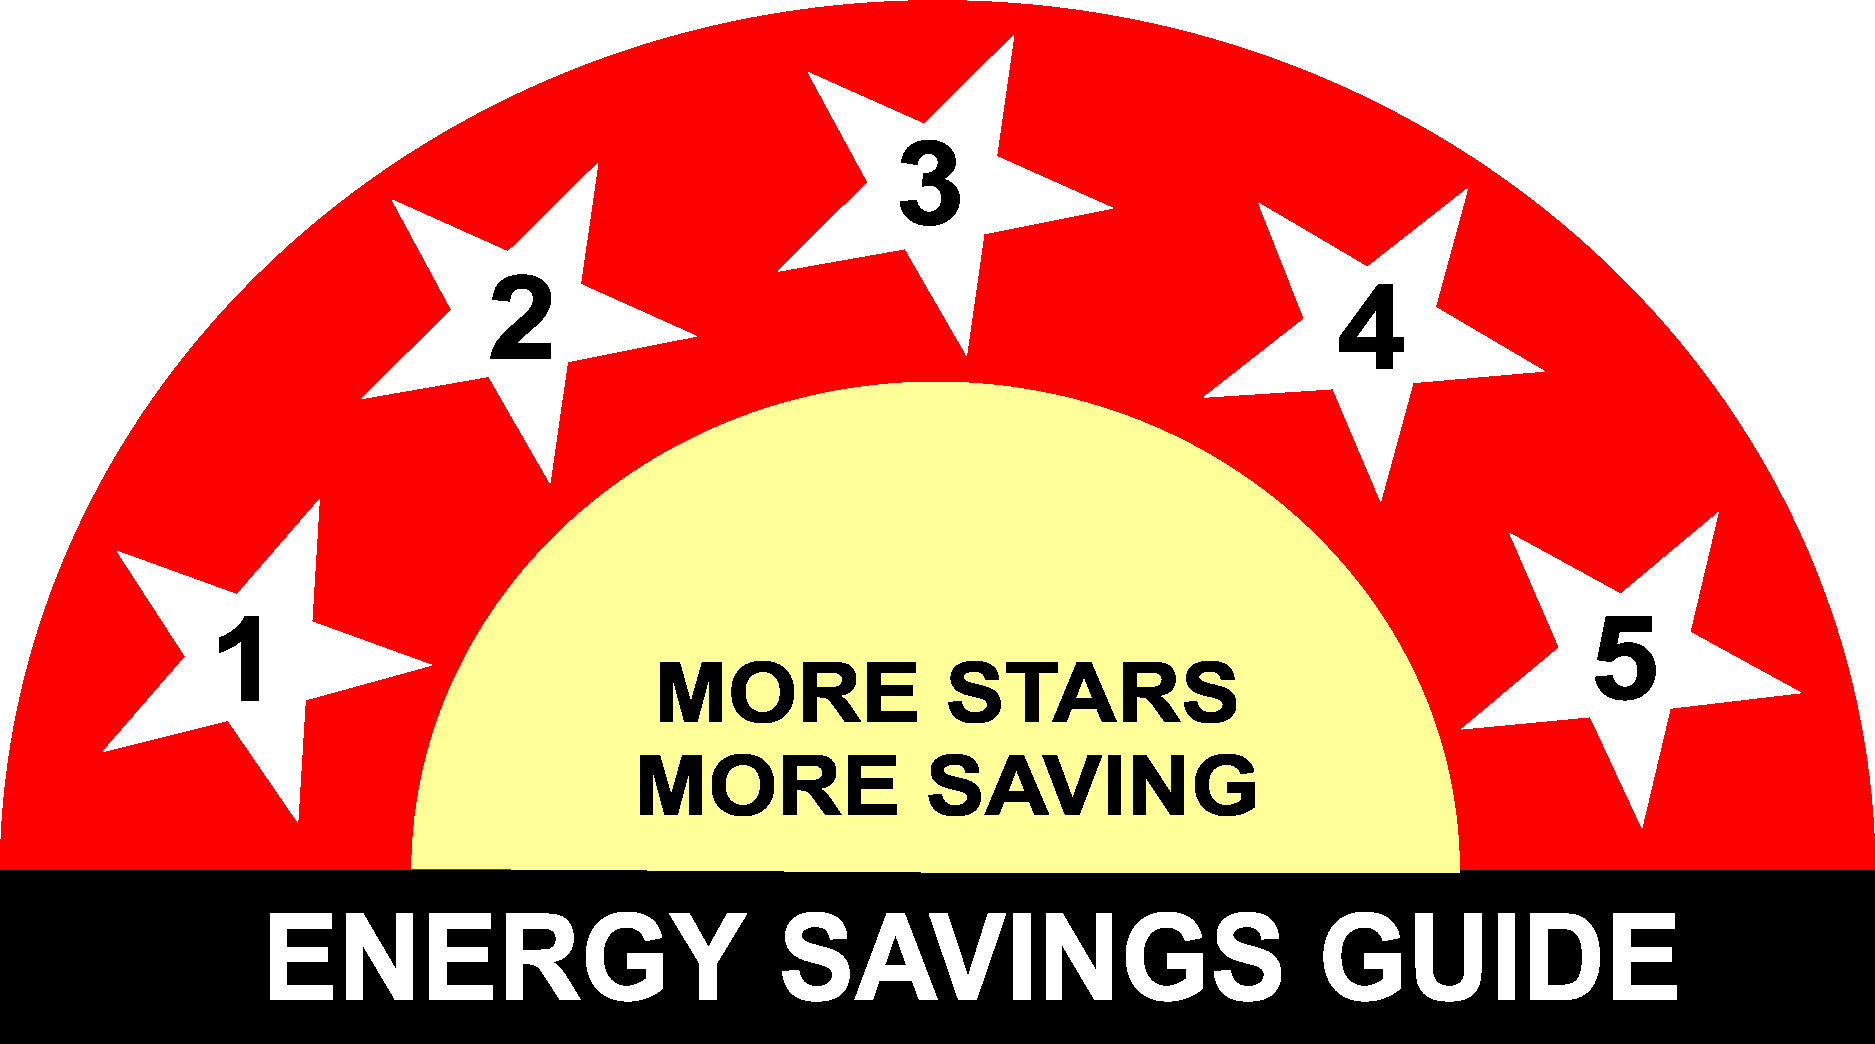 energy star logo vector